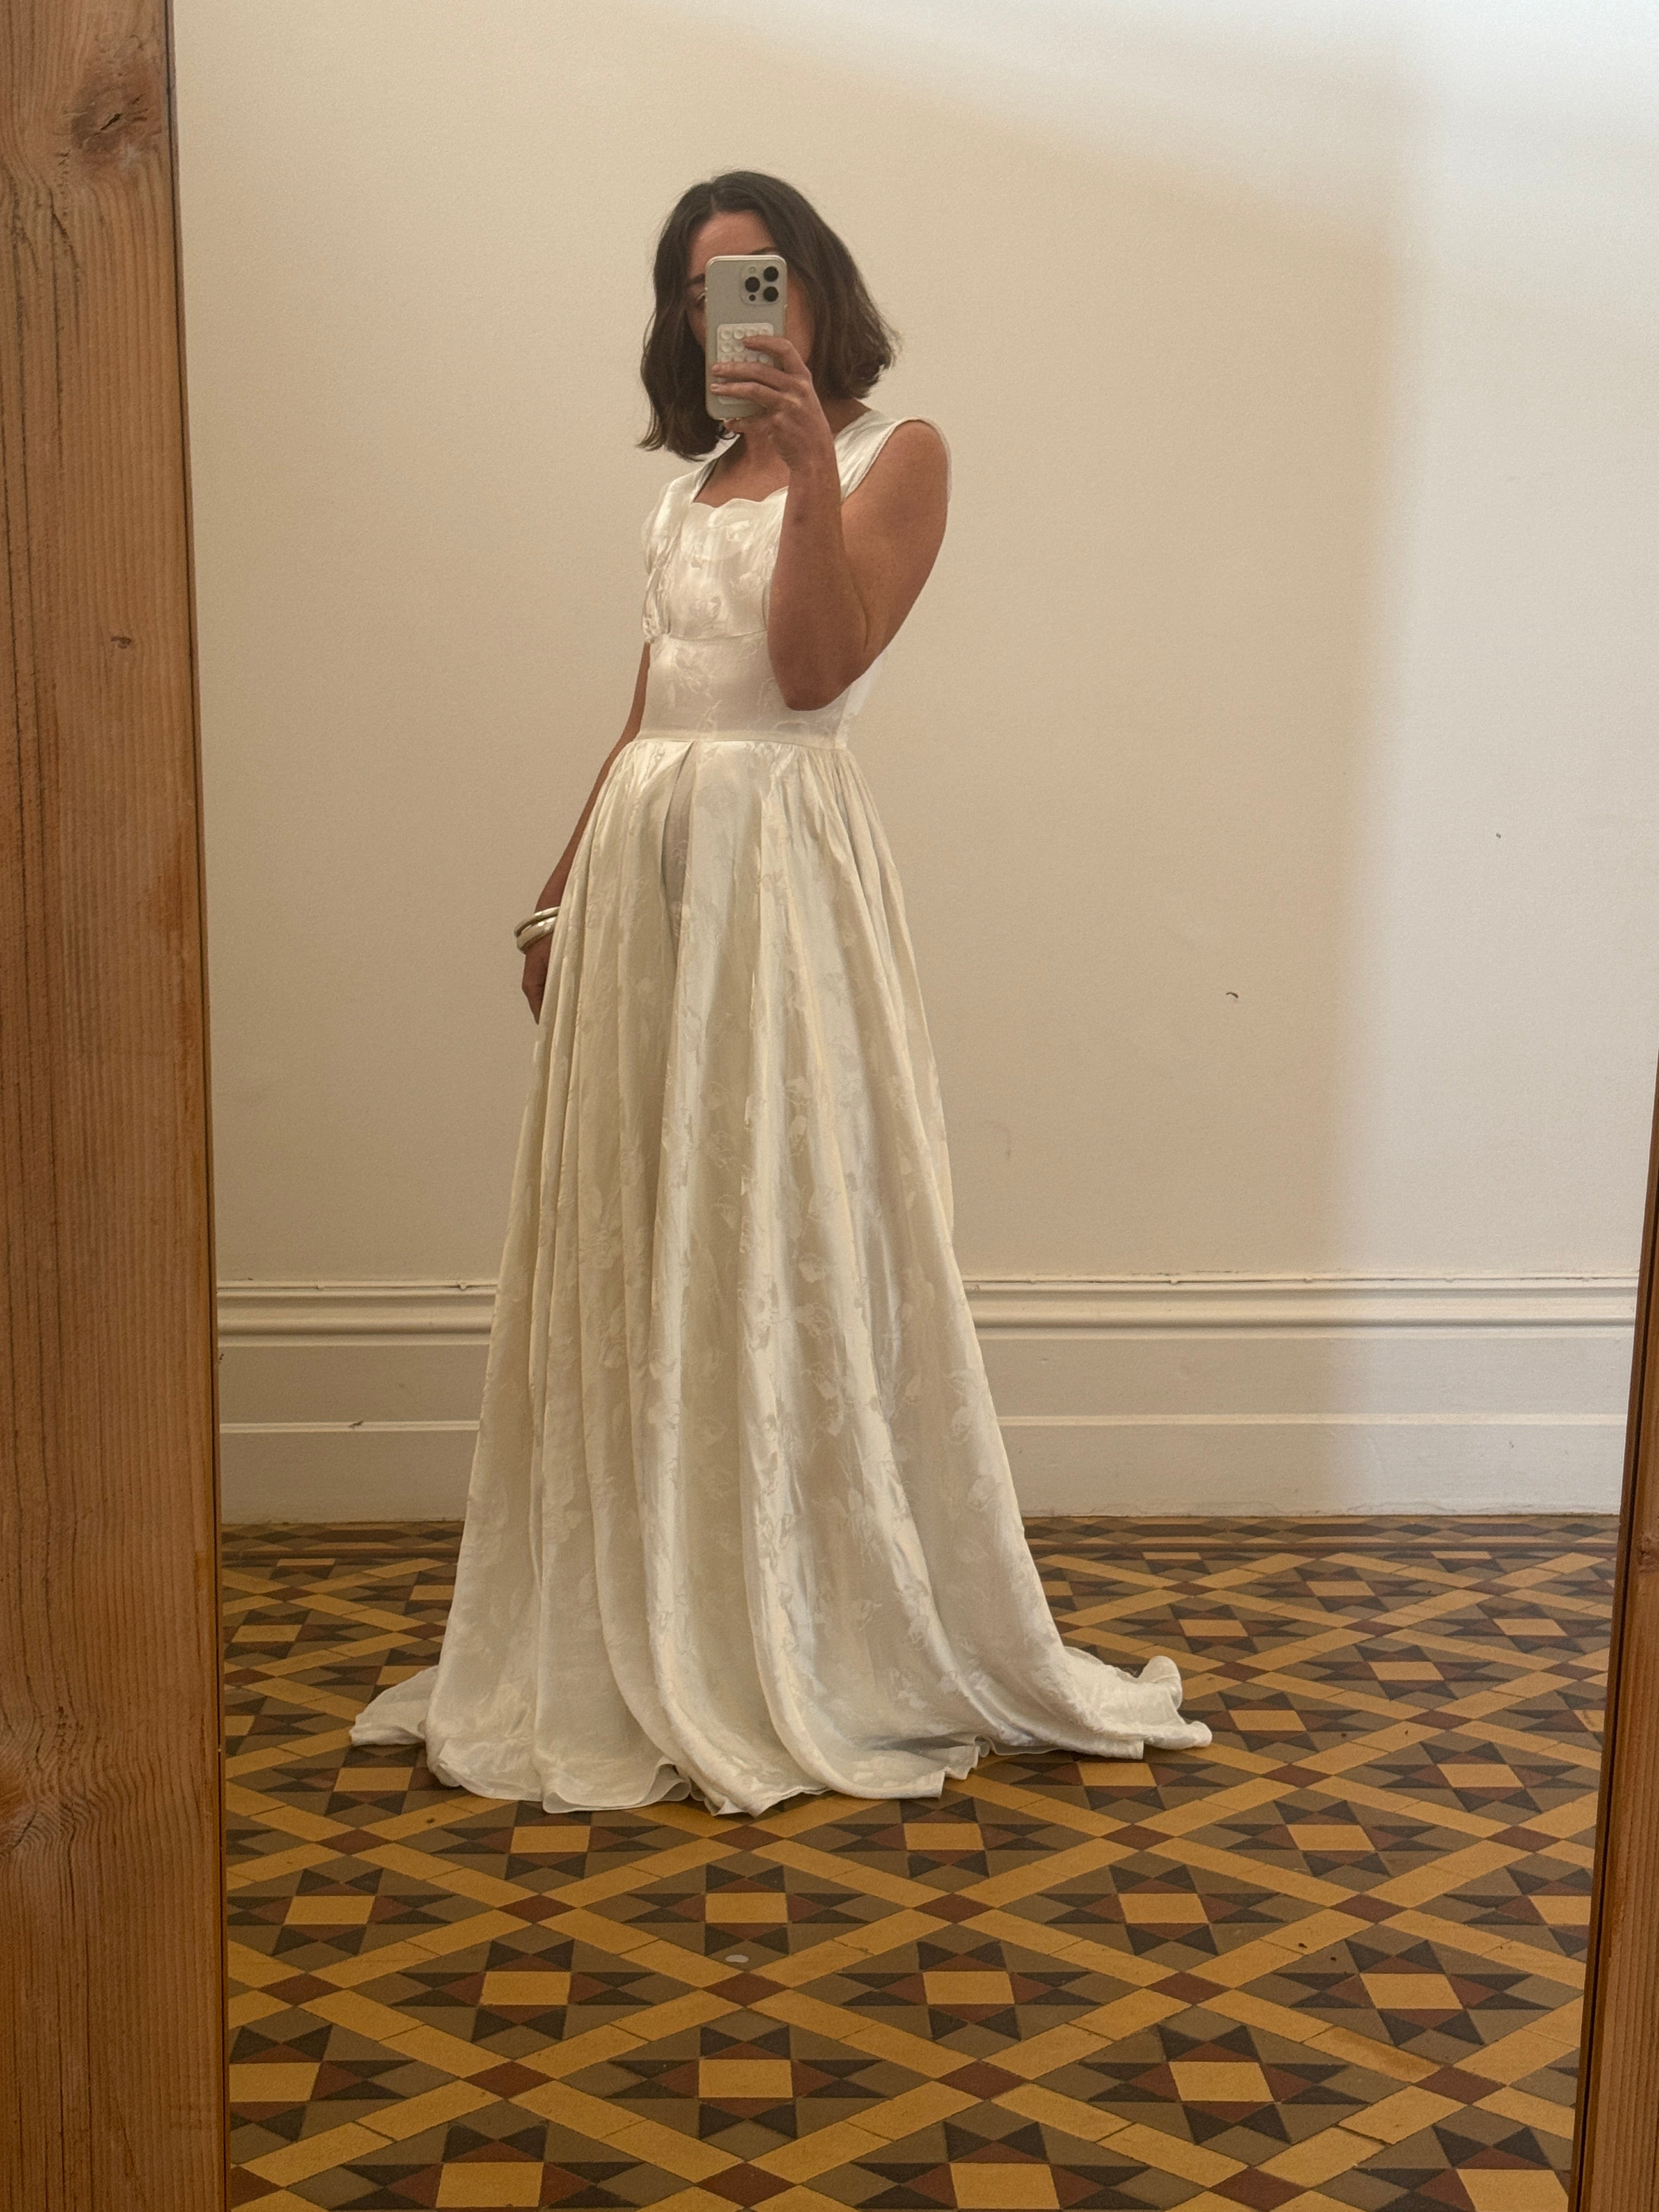 Vintage Satin Jacquard Floral Sleeveless Bridal Gown